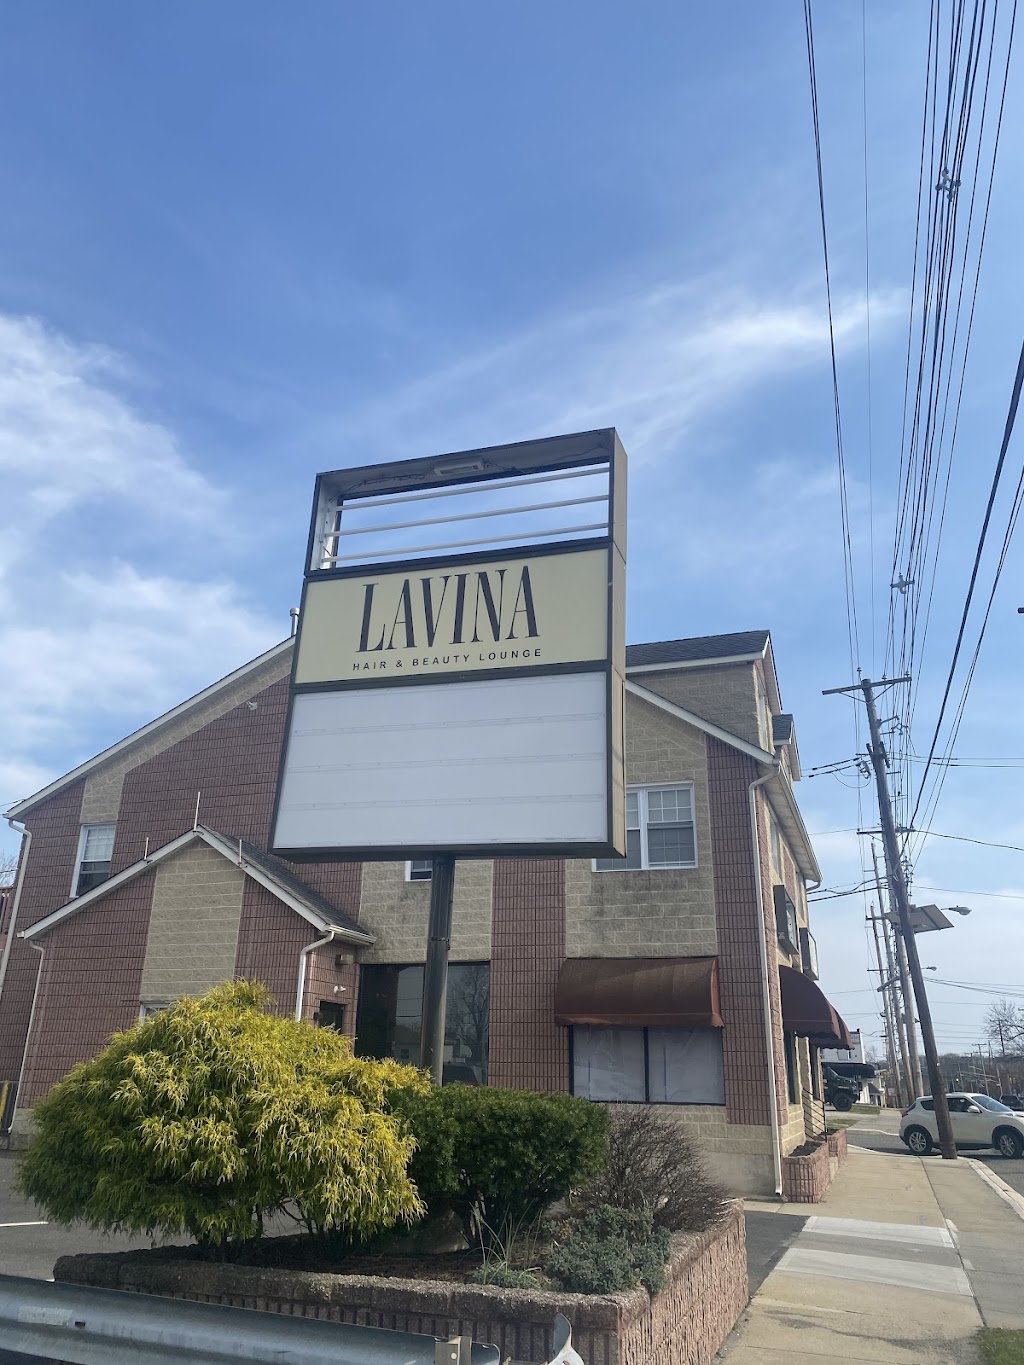 Lavina Hair & Beauty Lounge | 700 N Black Horse Pike, Glendora, NJ 08029 | Phone: (856) 219-3137